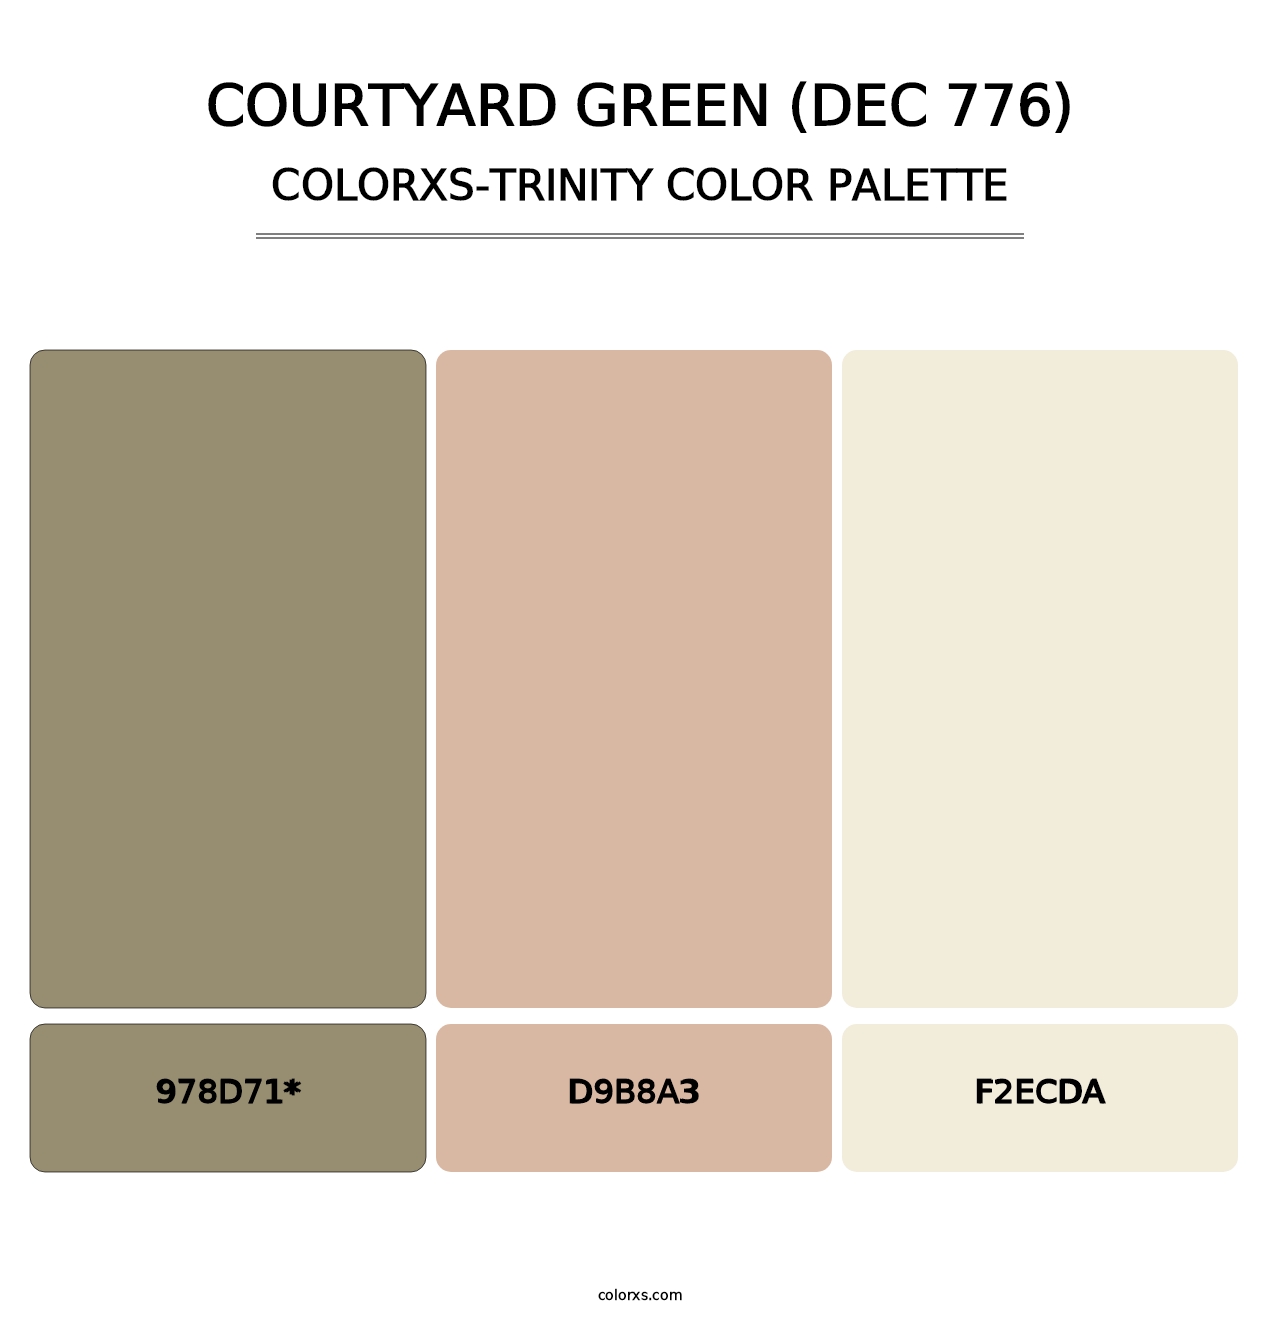 Courtyard Green (DEC 776) - Colorxs Trinity Palette